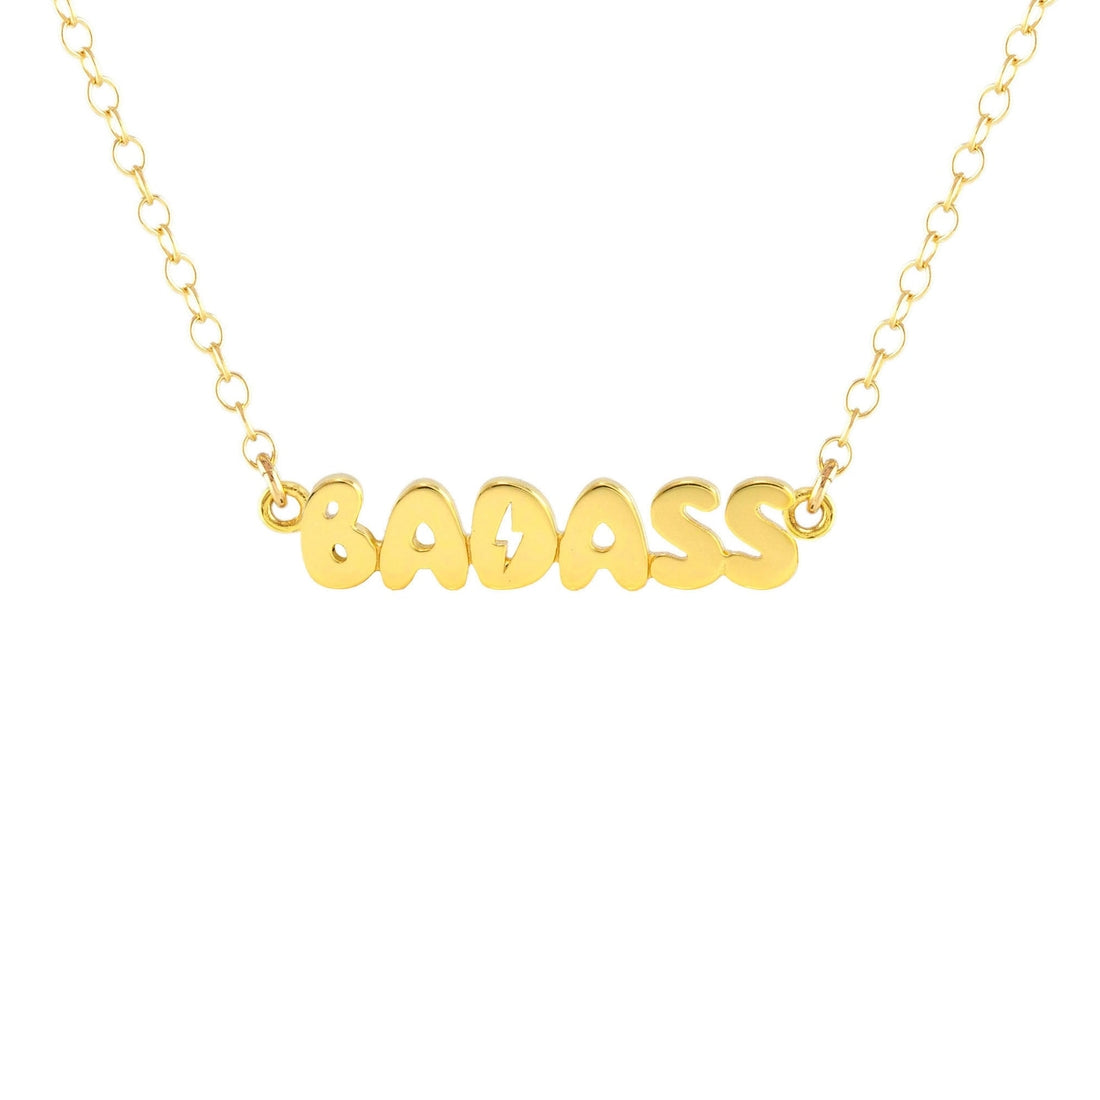 Bubble Charm "Badass" Necklace